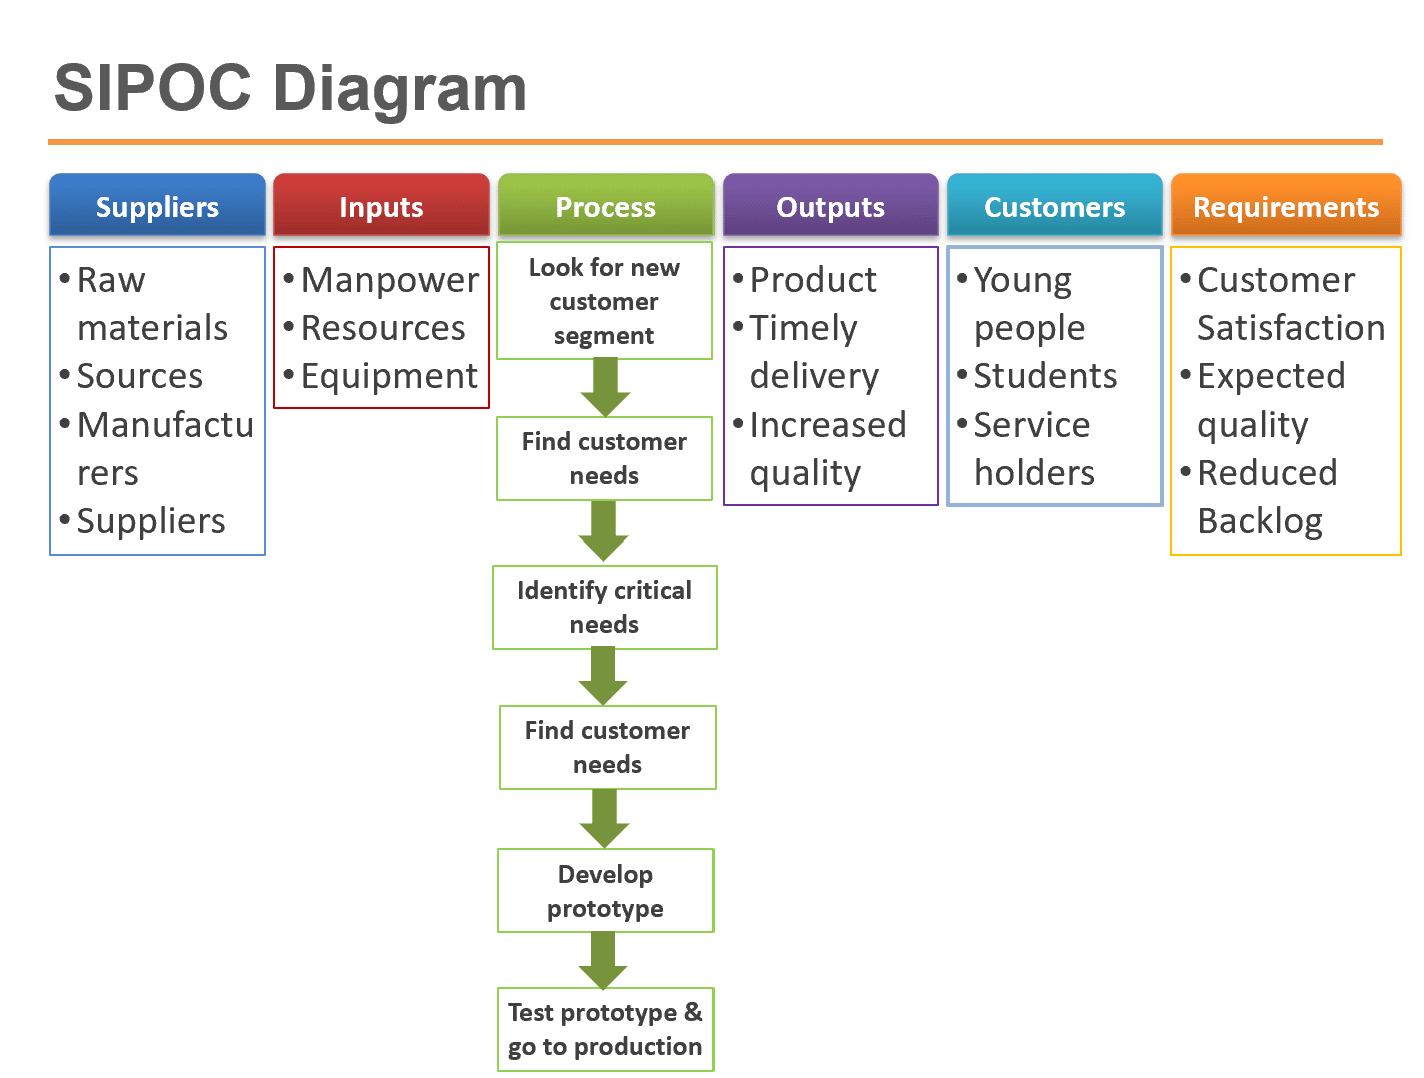 SIPOC diagram